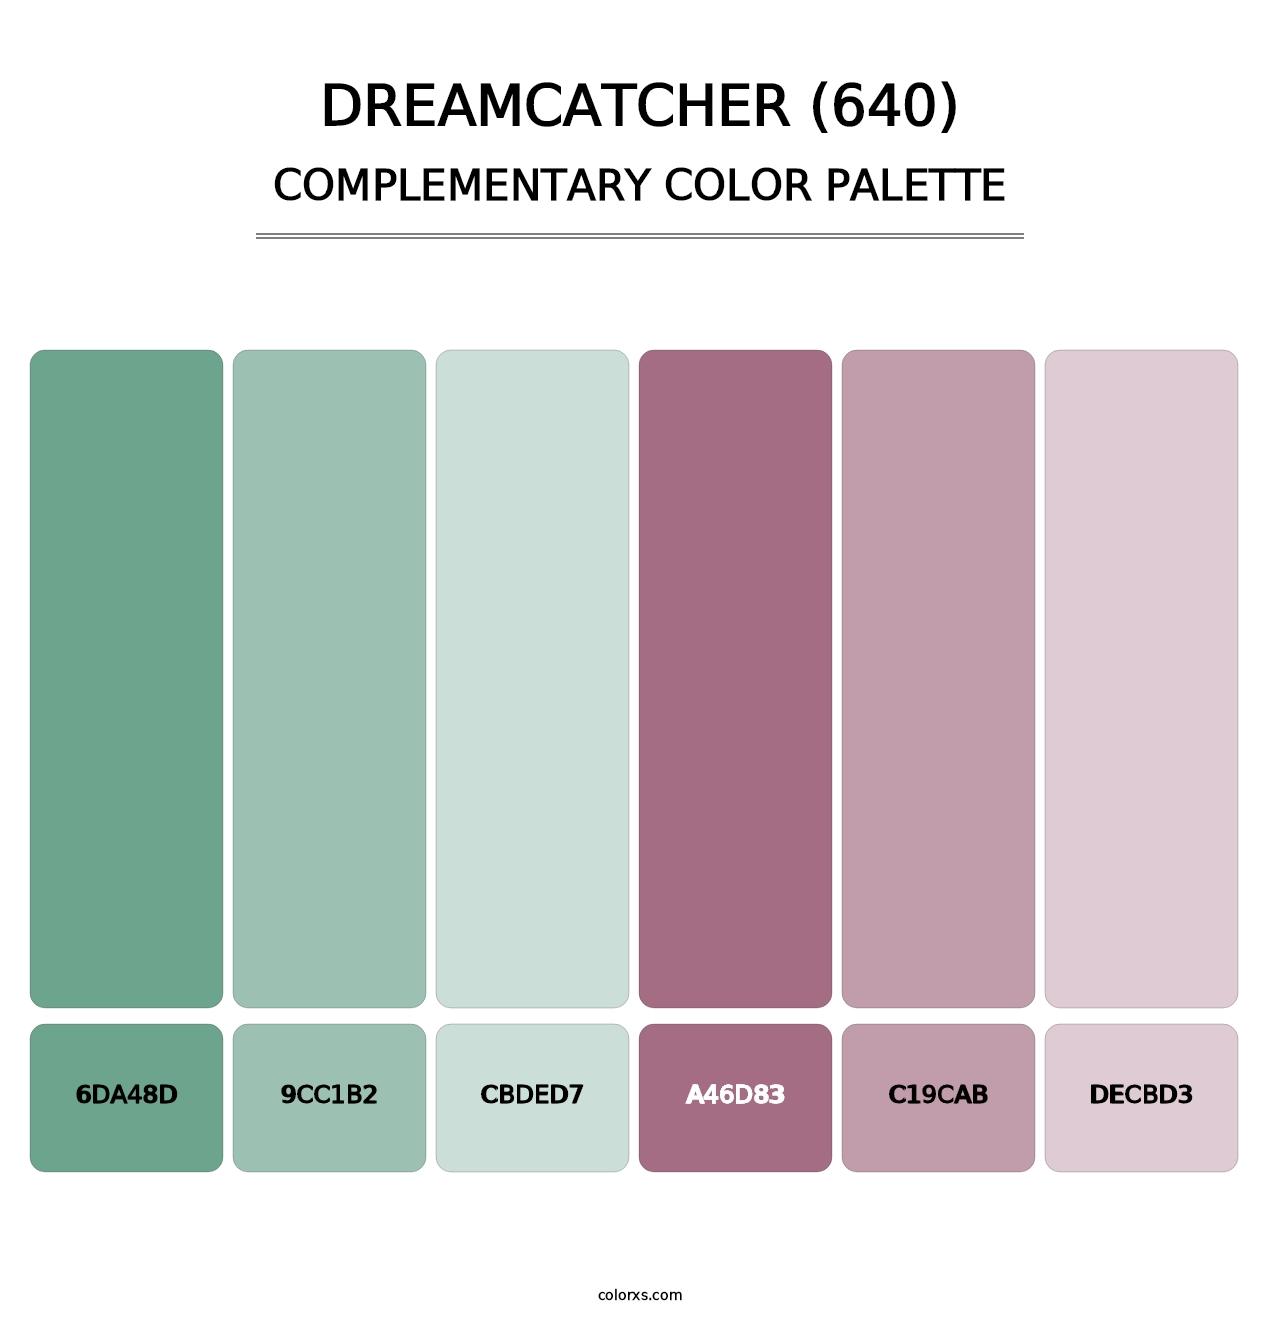 Dreamcatcher (640) - Complementary Color Palette